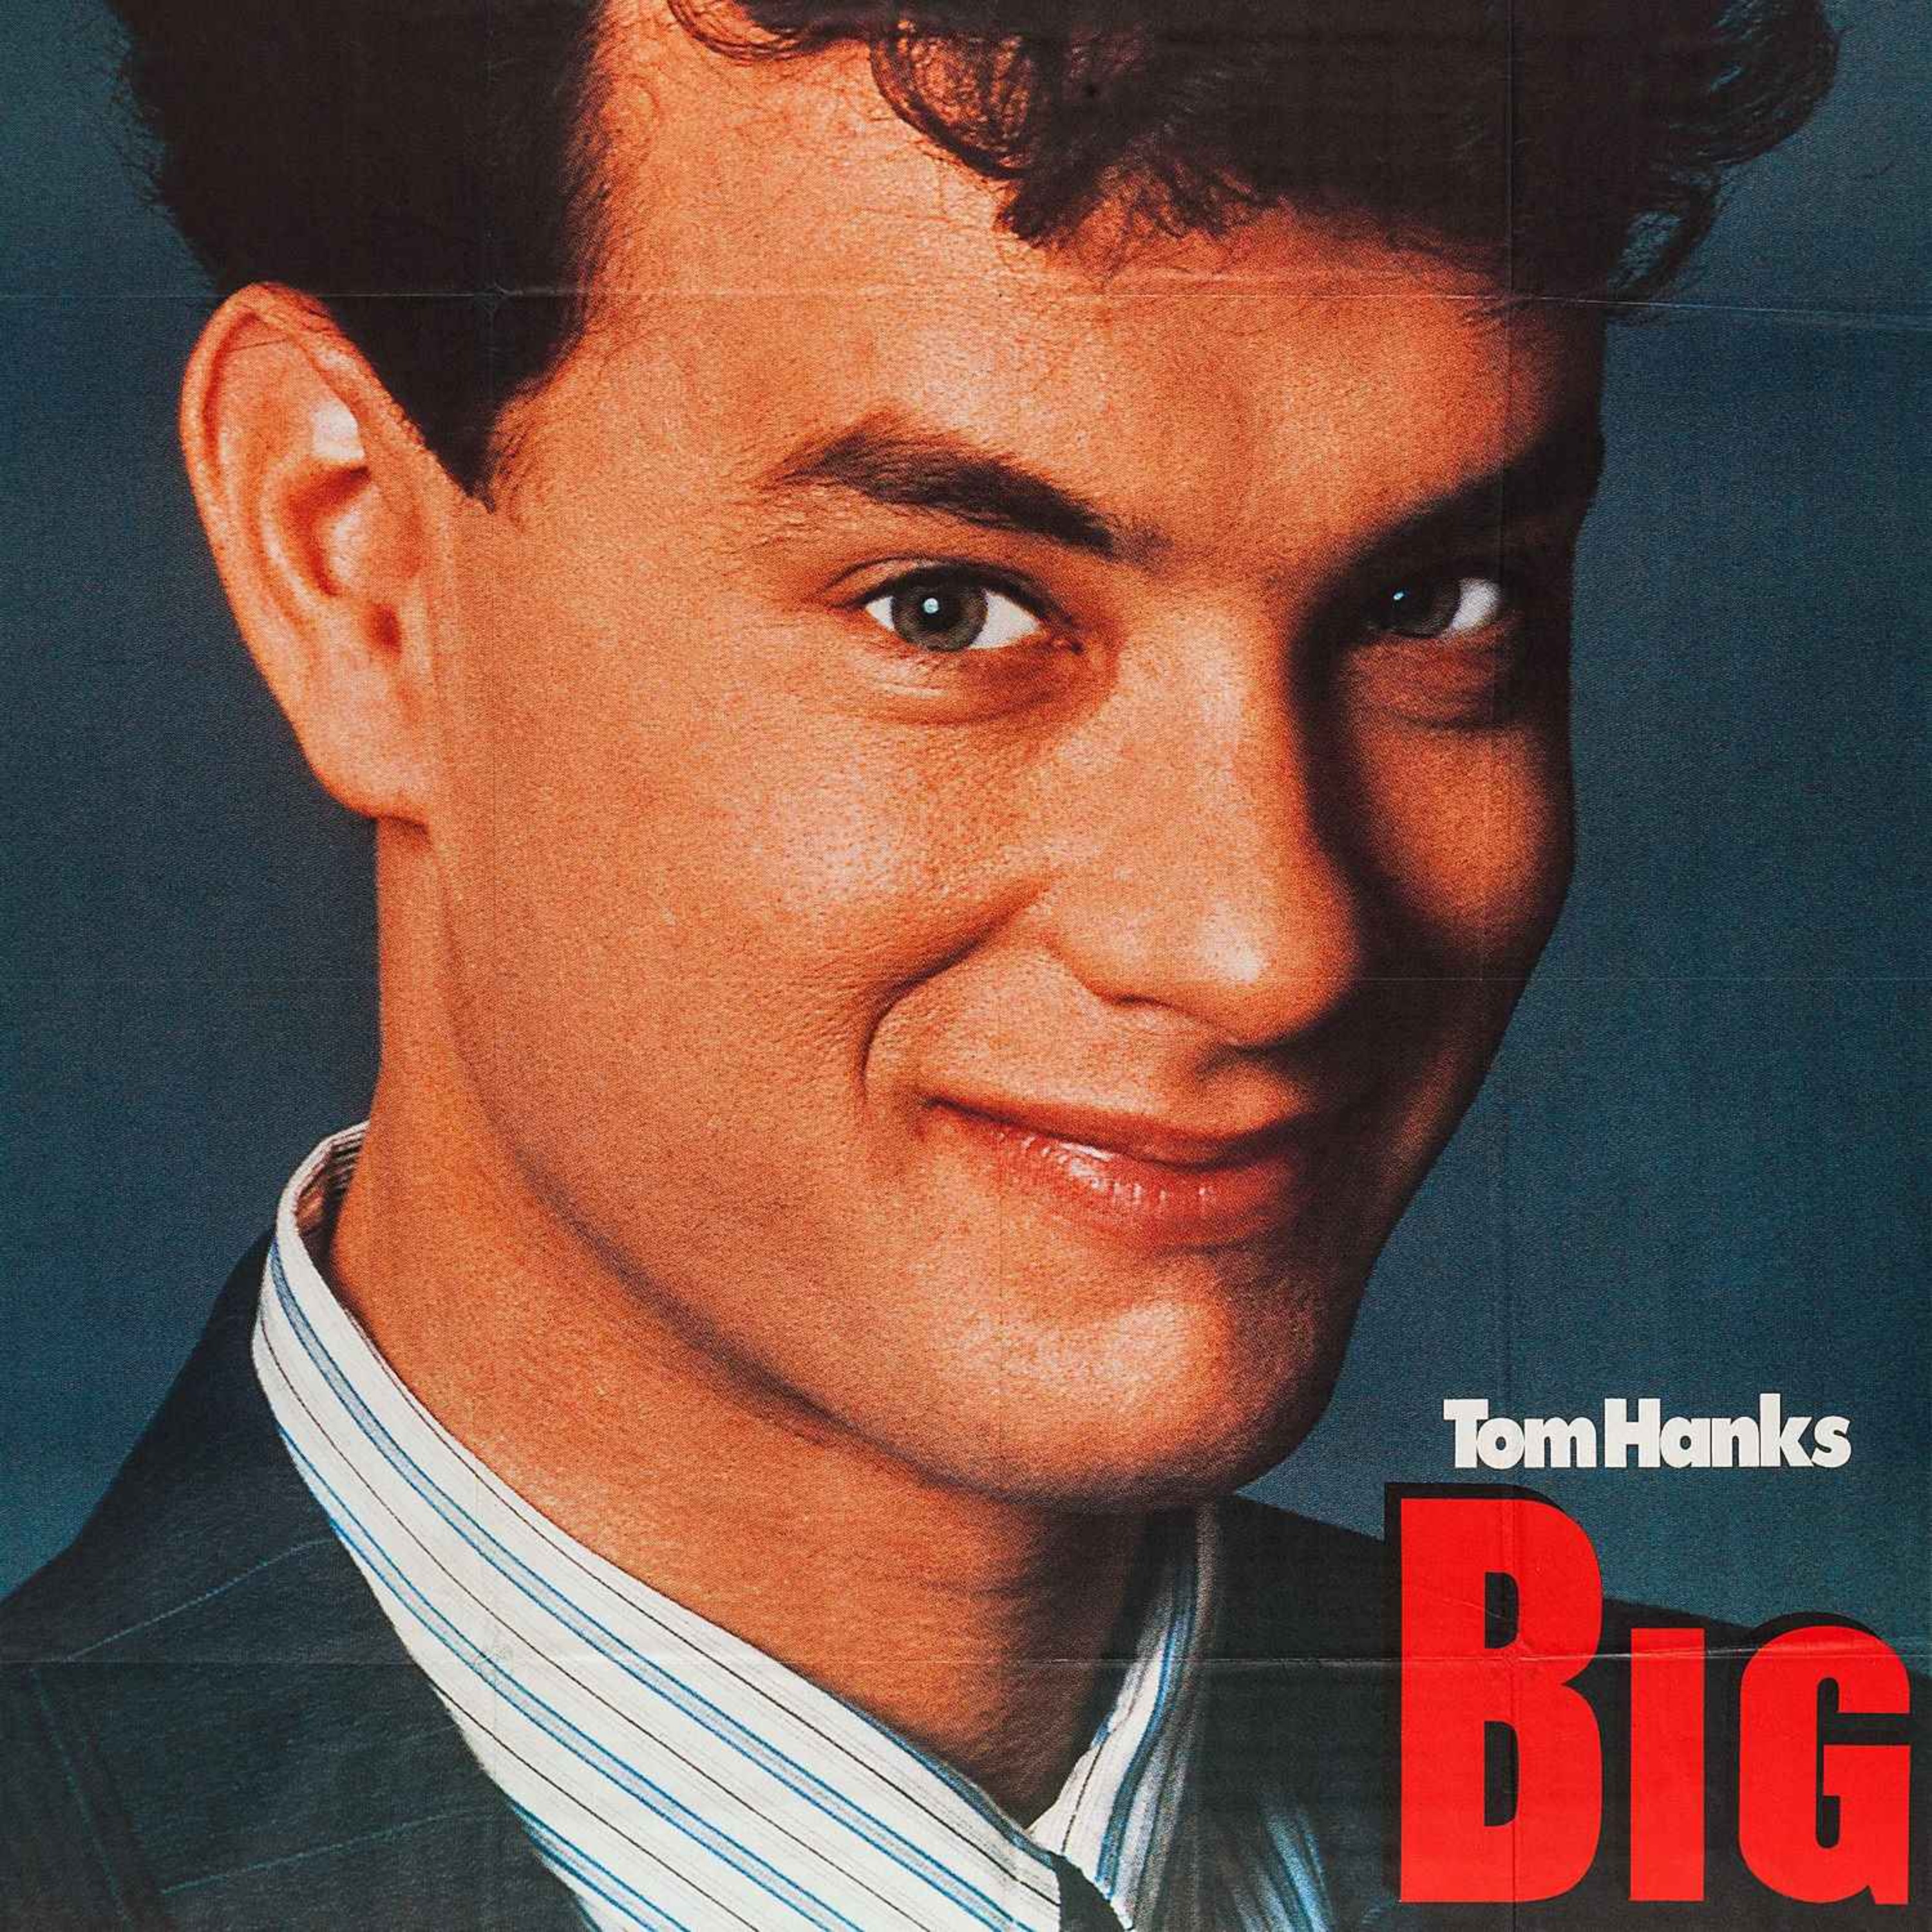 Swapcast Revisited: Big (1988)